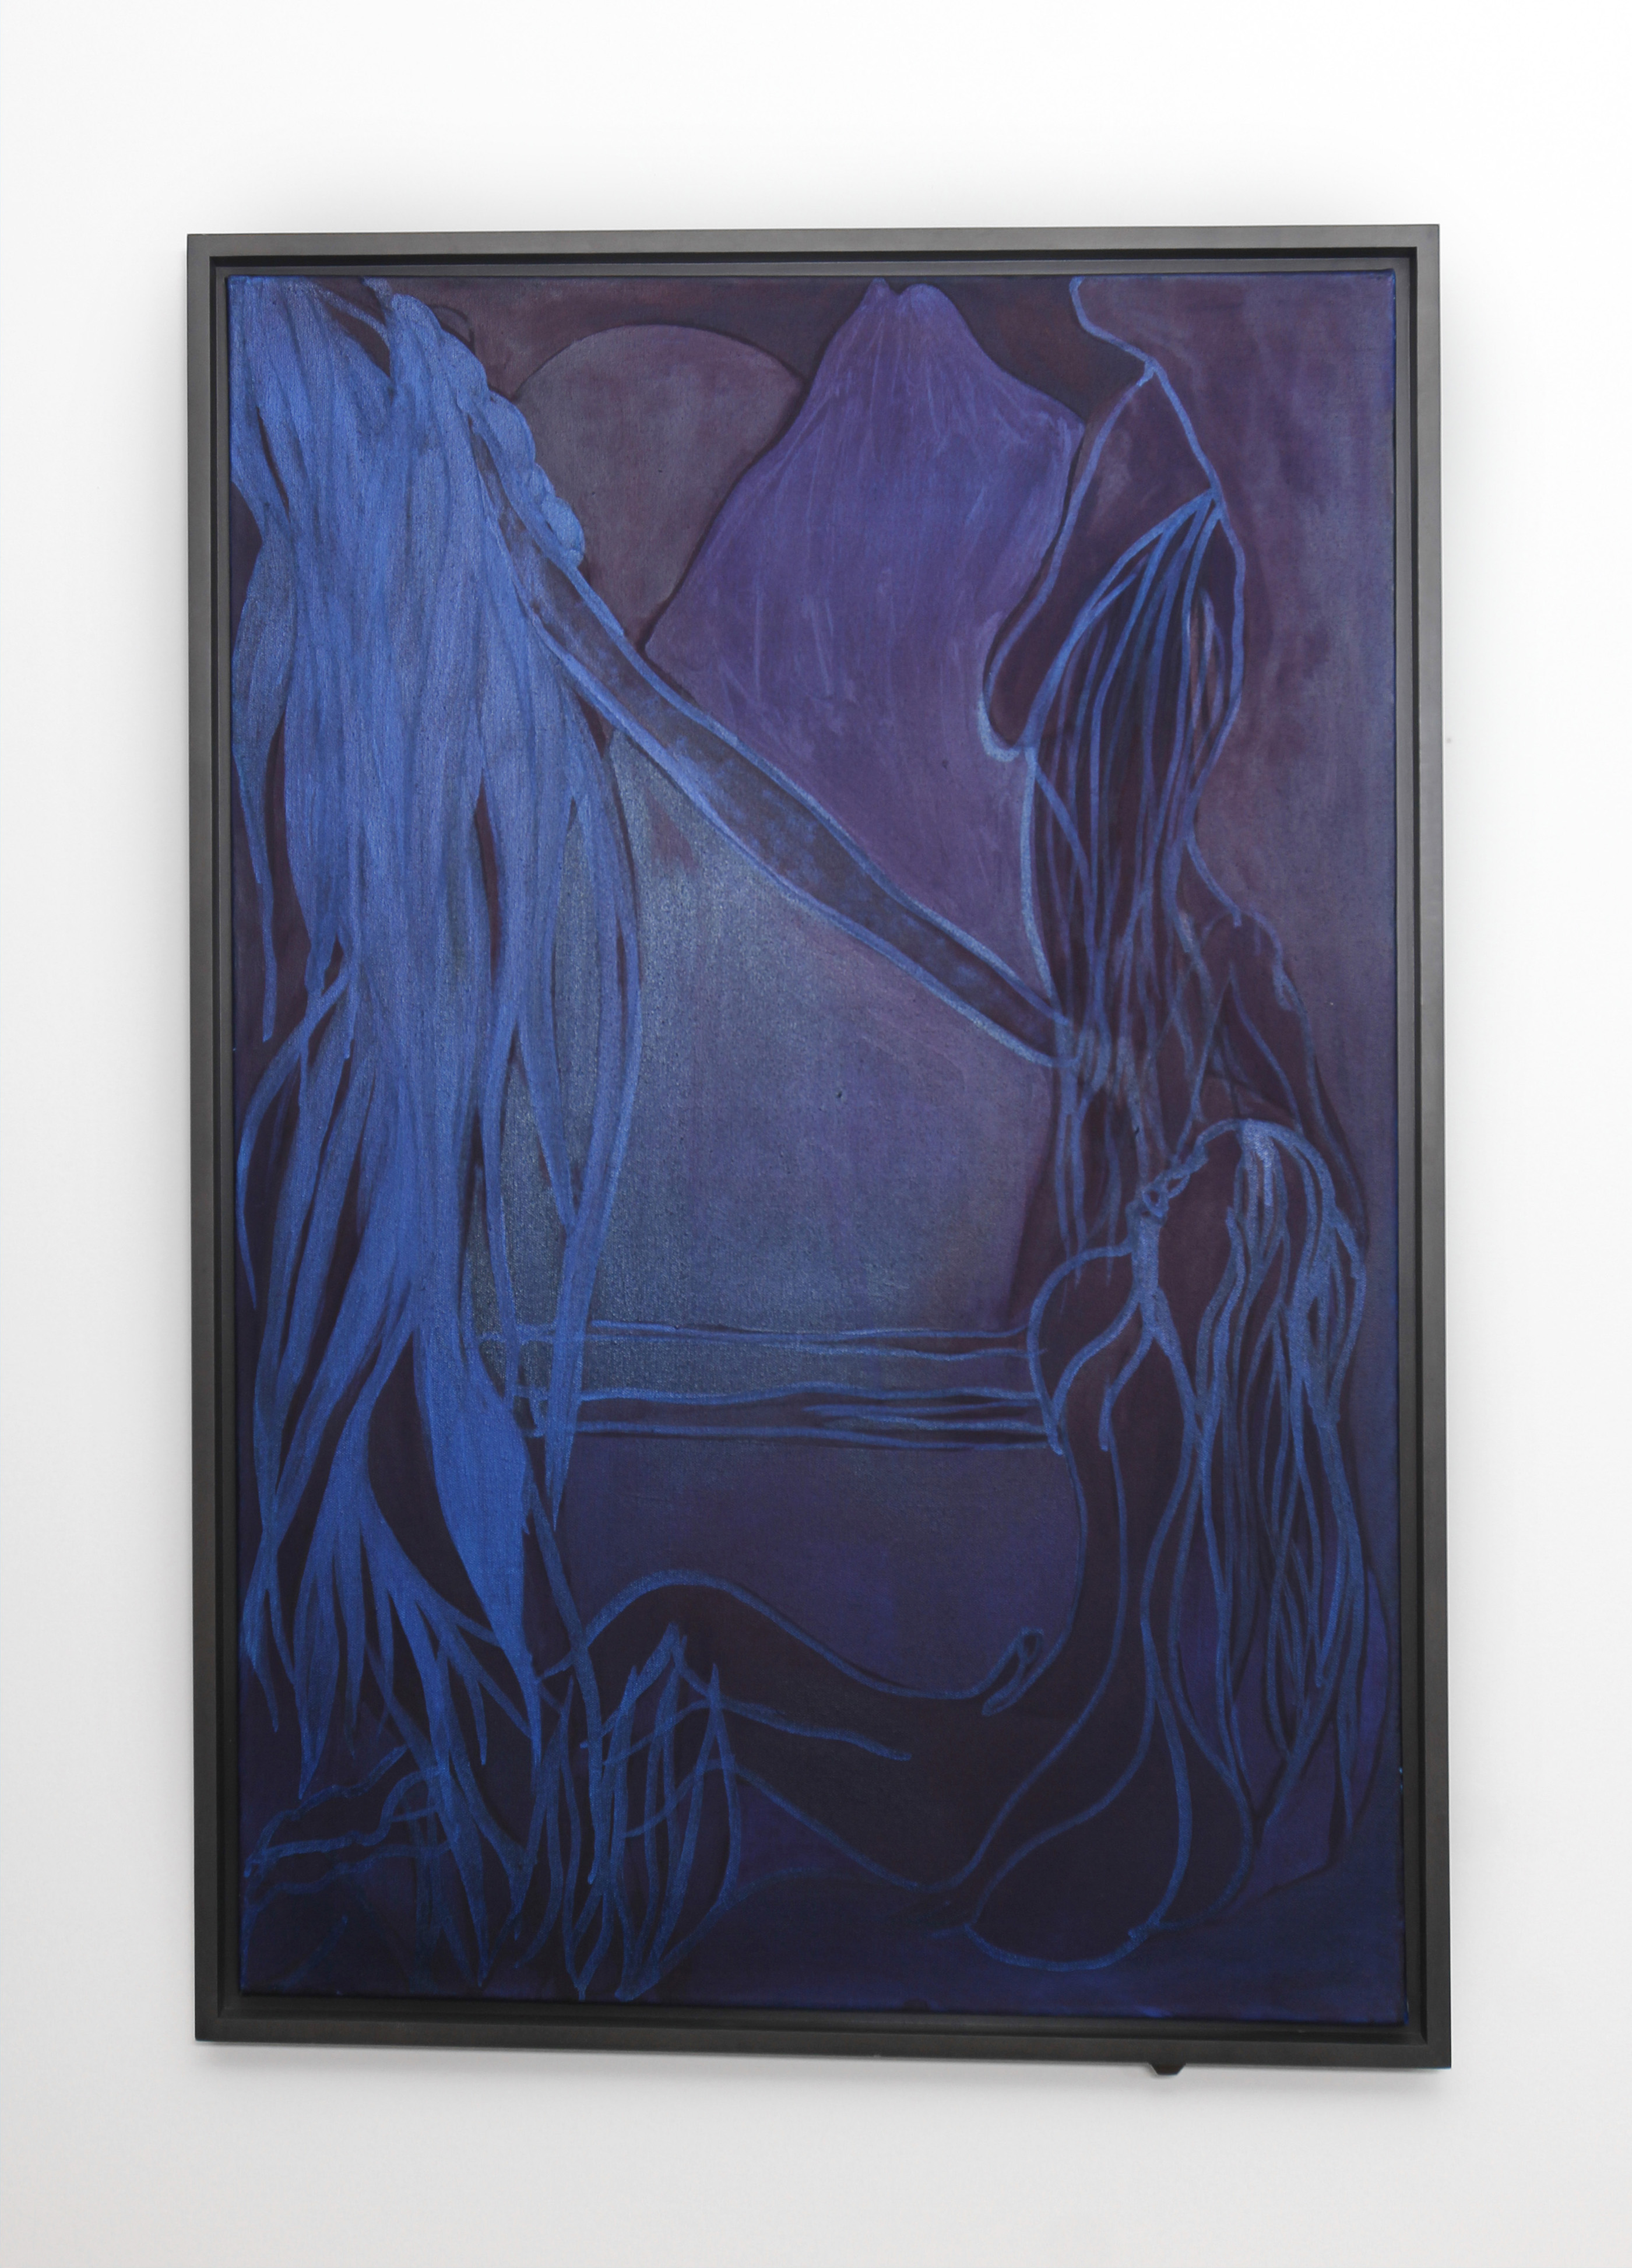 Chris Ofili, Blue Lazarus (2007). Courtesy of Samdani Art Foundation.